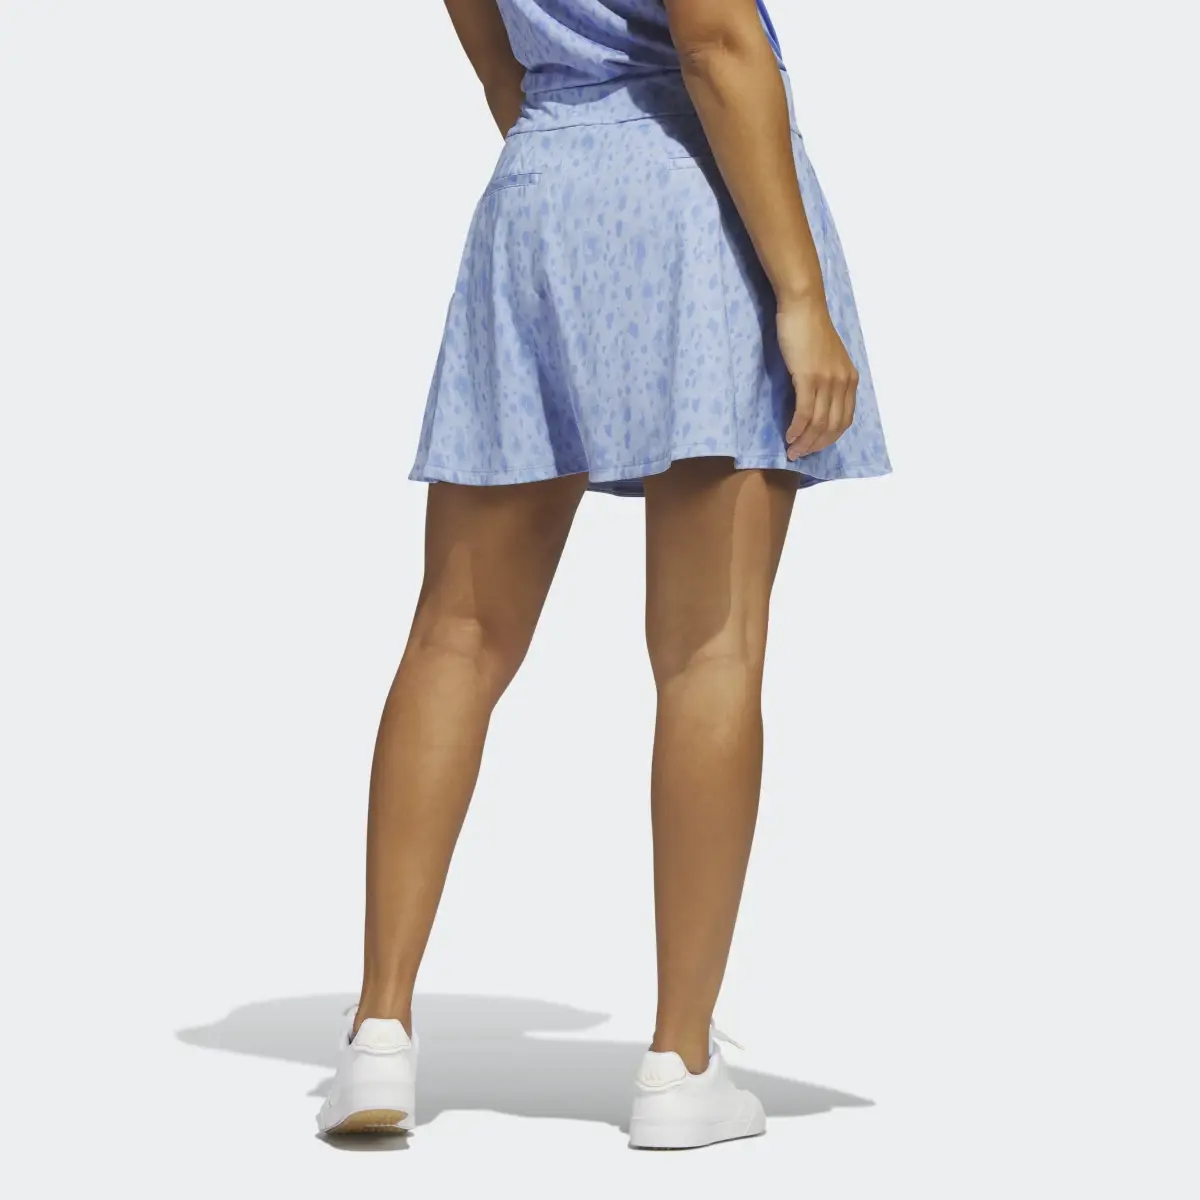 Adidas Printed 16-Inch Golf Skirt. 2